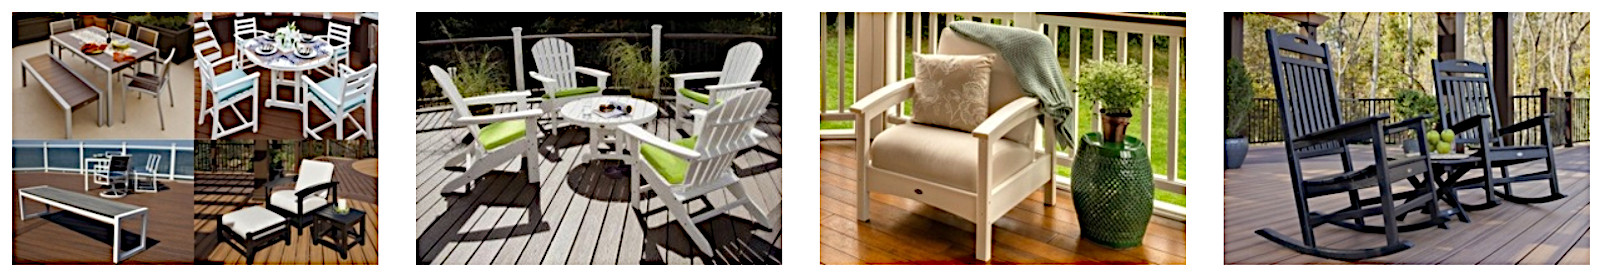 Trex outdoor furniture deals